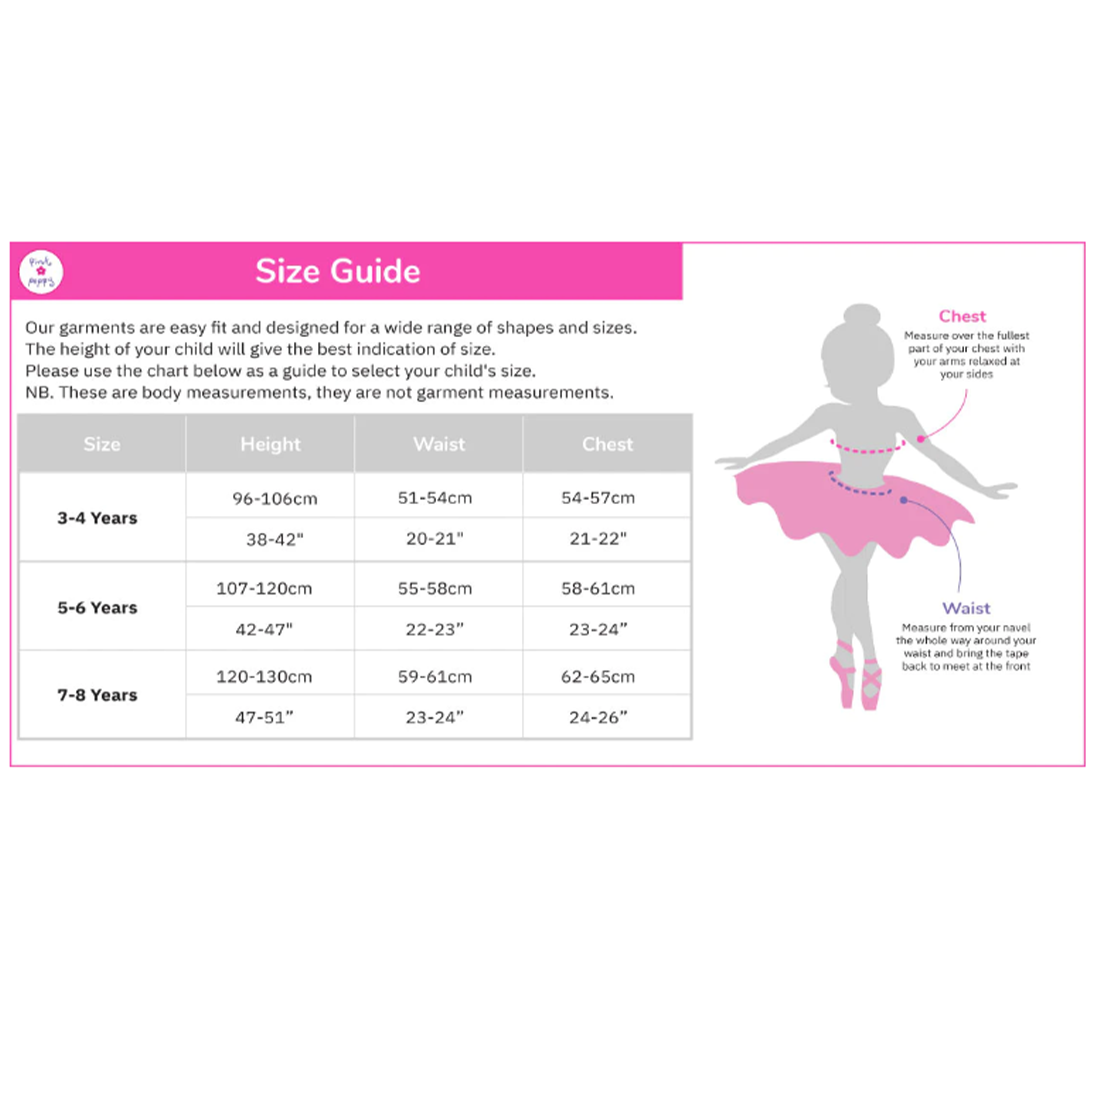 Hot Pink Rose Fairy Dress sizes 3/4